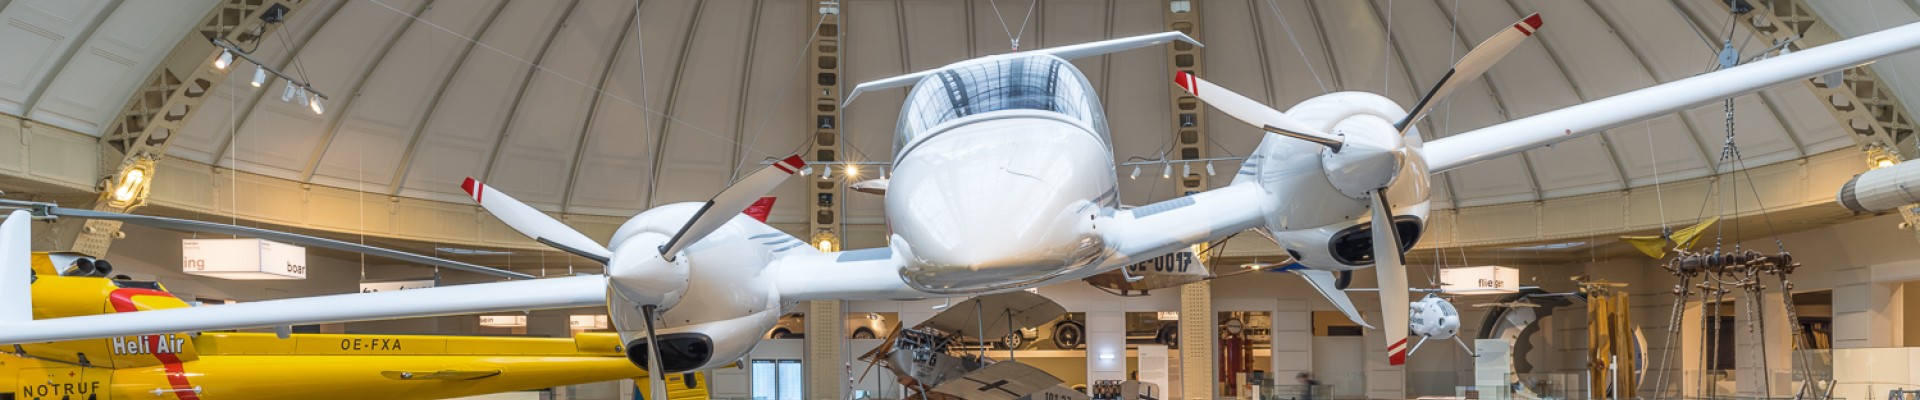 The propeller plane "Diamond DA42" in the exhibition "Mobility": 